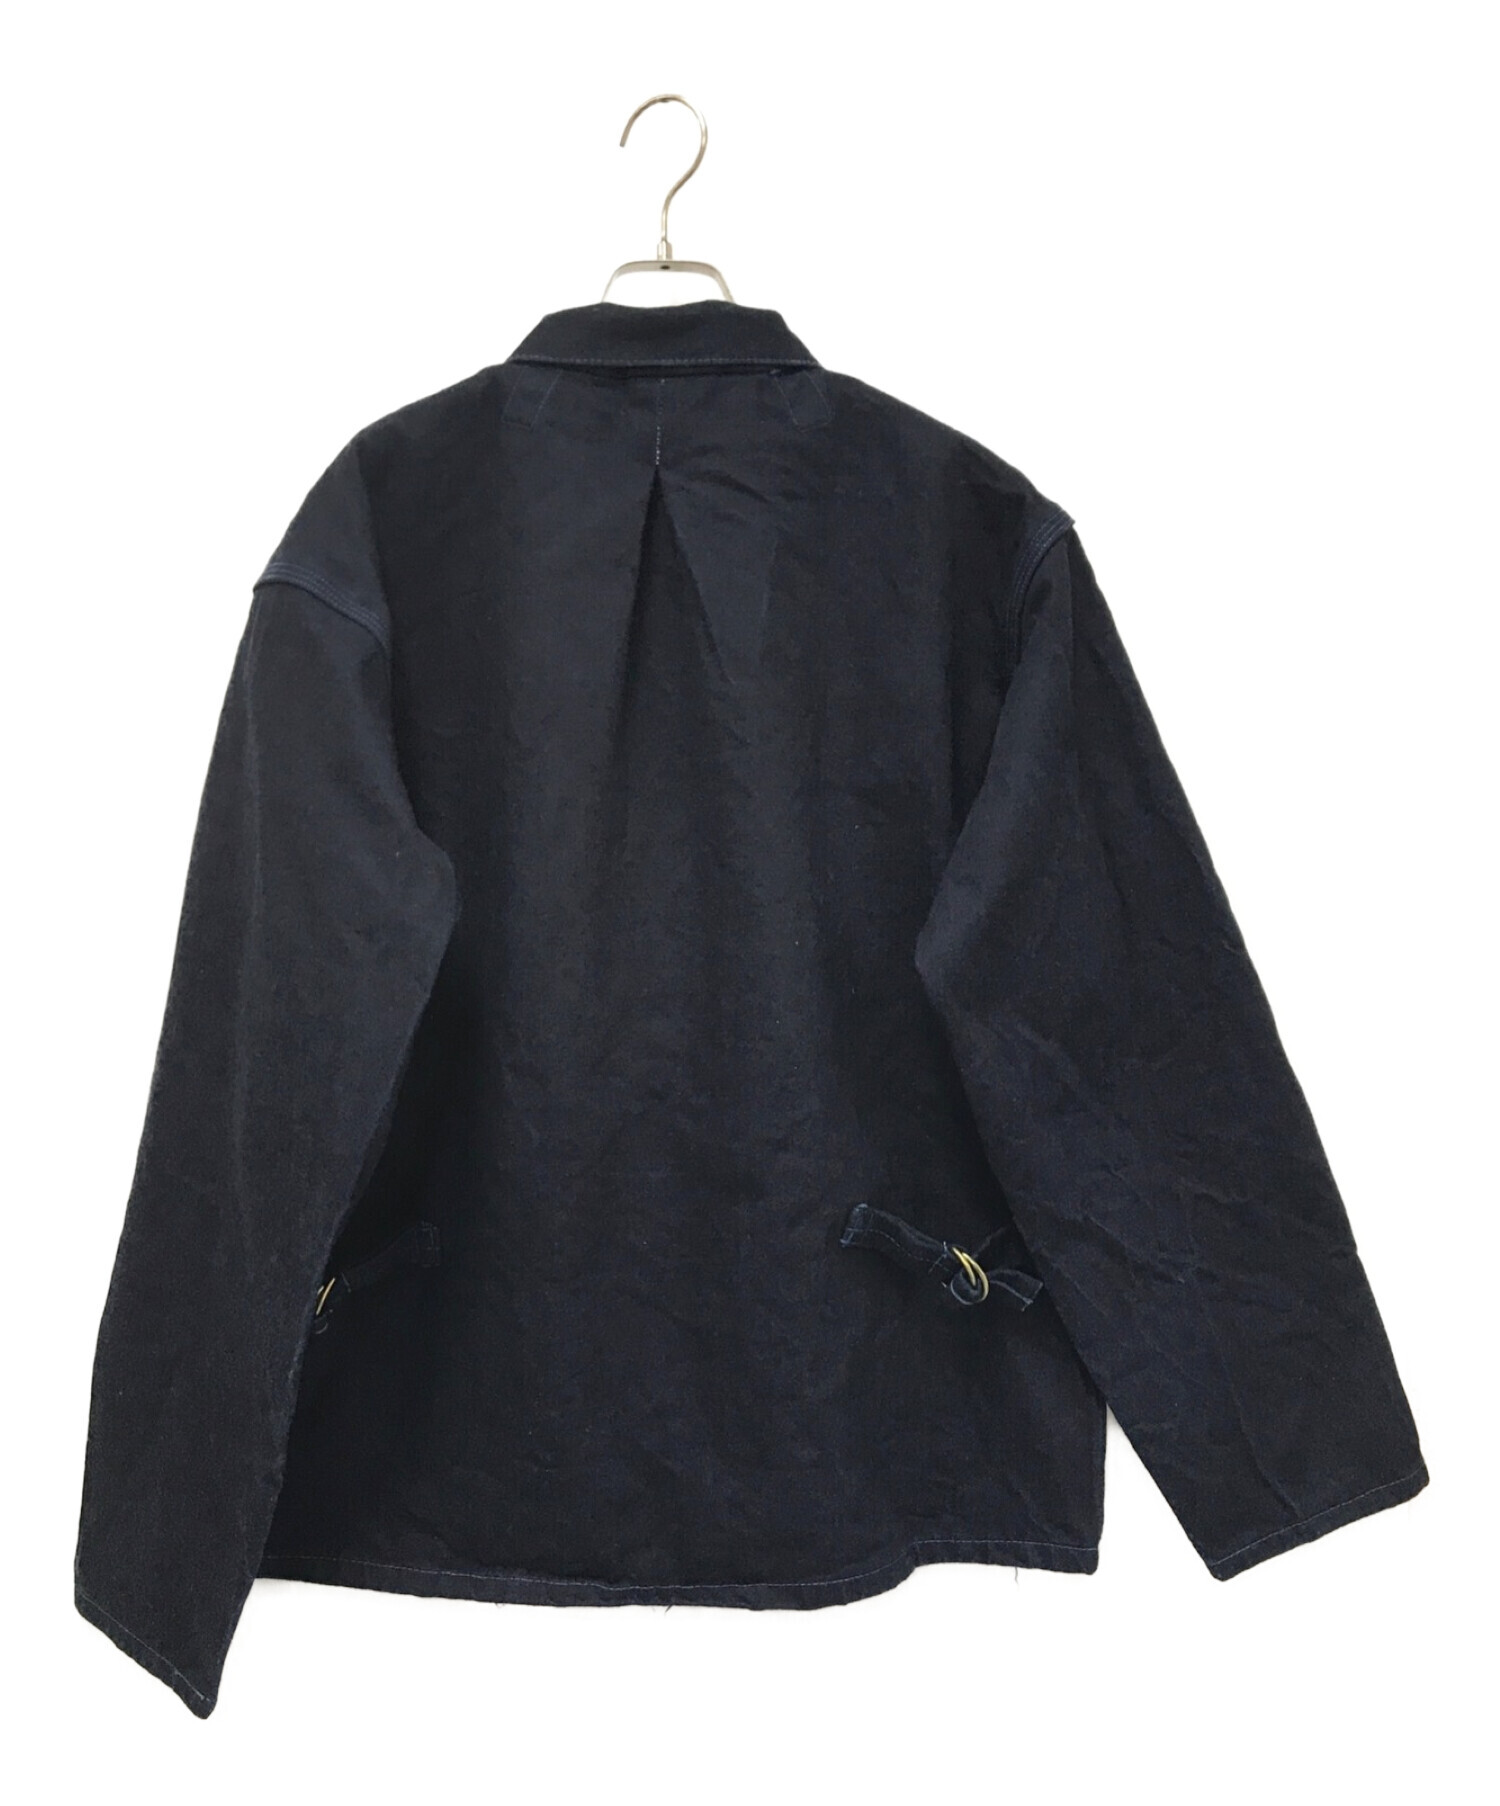 TENDER Co. (テンダー コー) TEN YEARS 900 Jacket Woad ネイビー サイズ:5